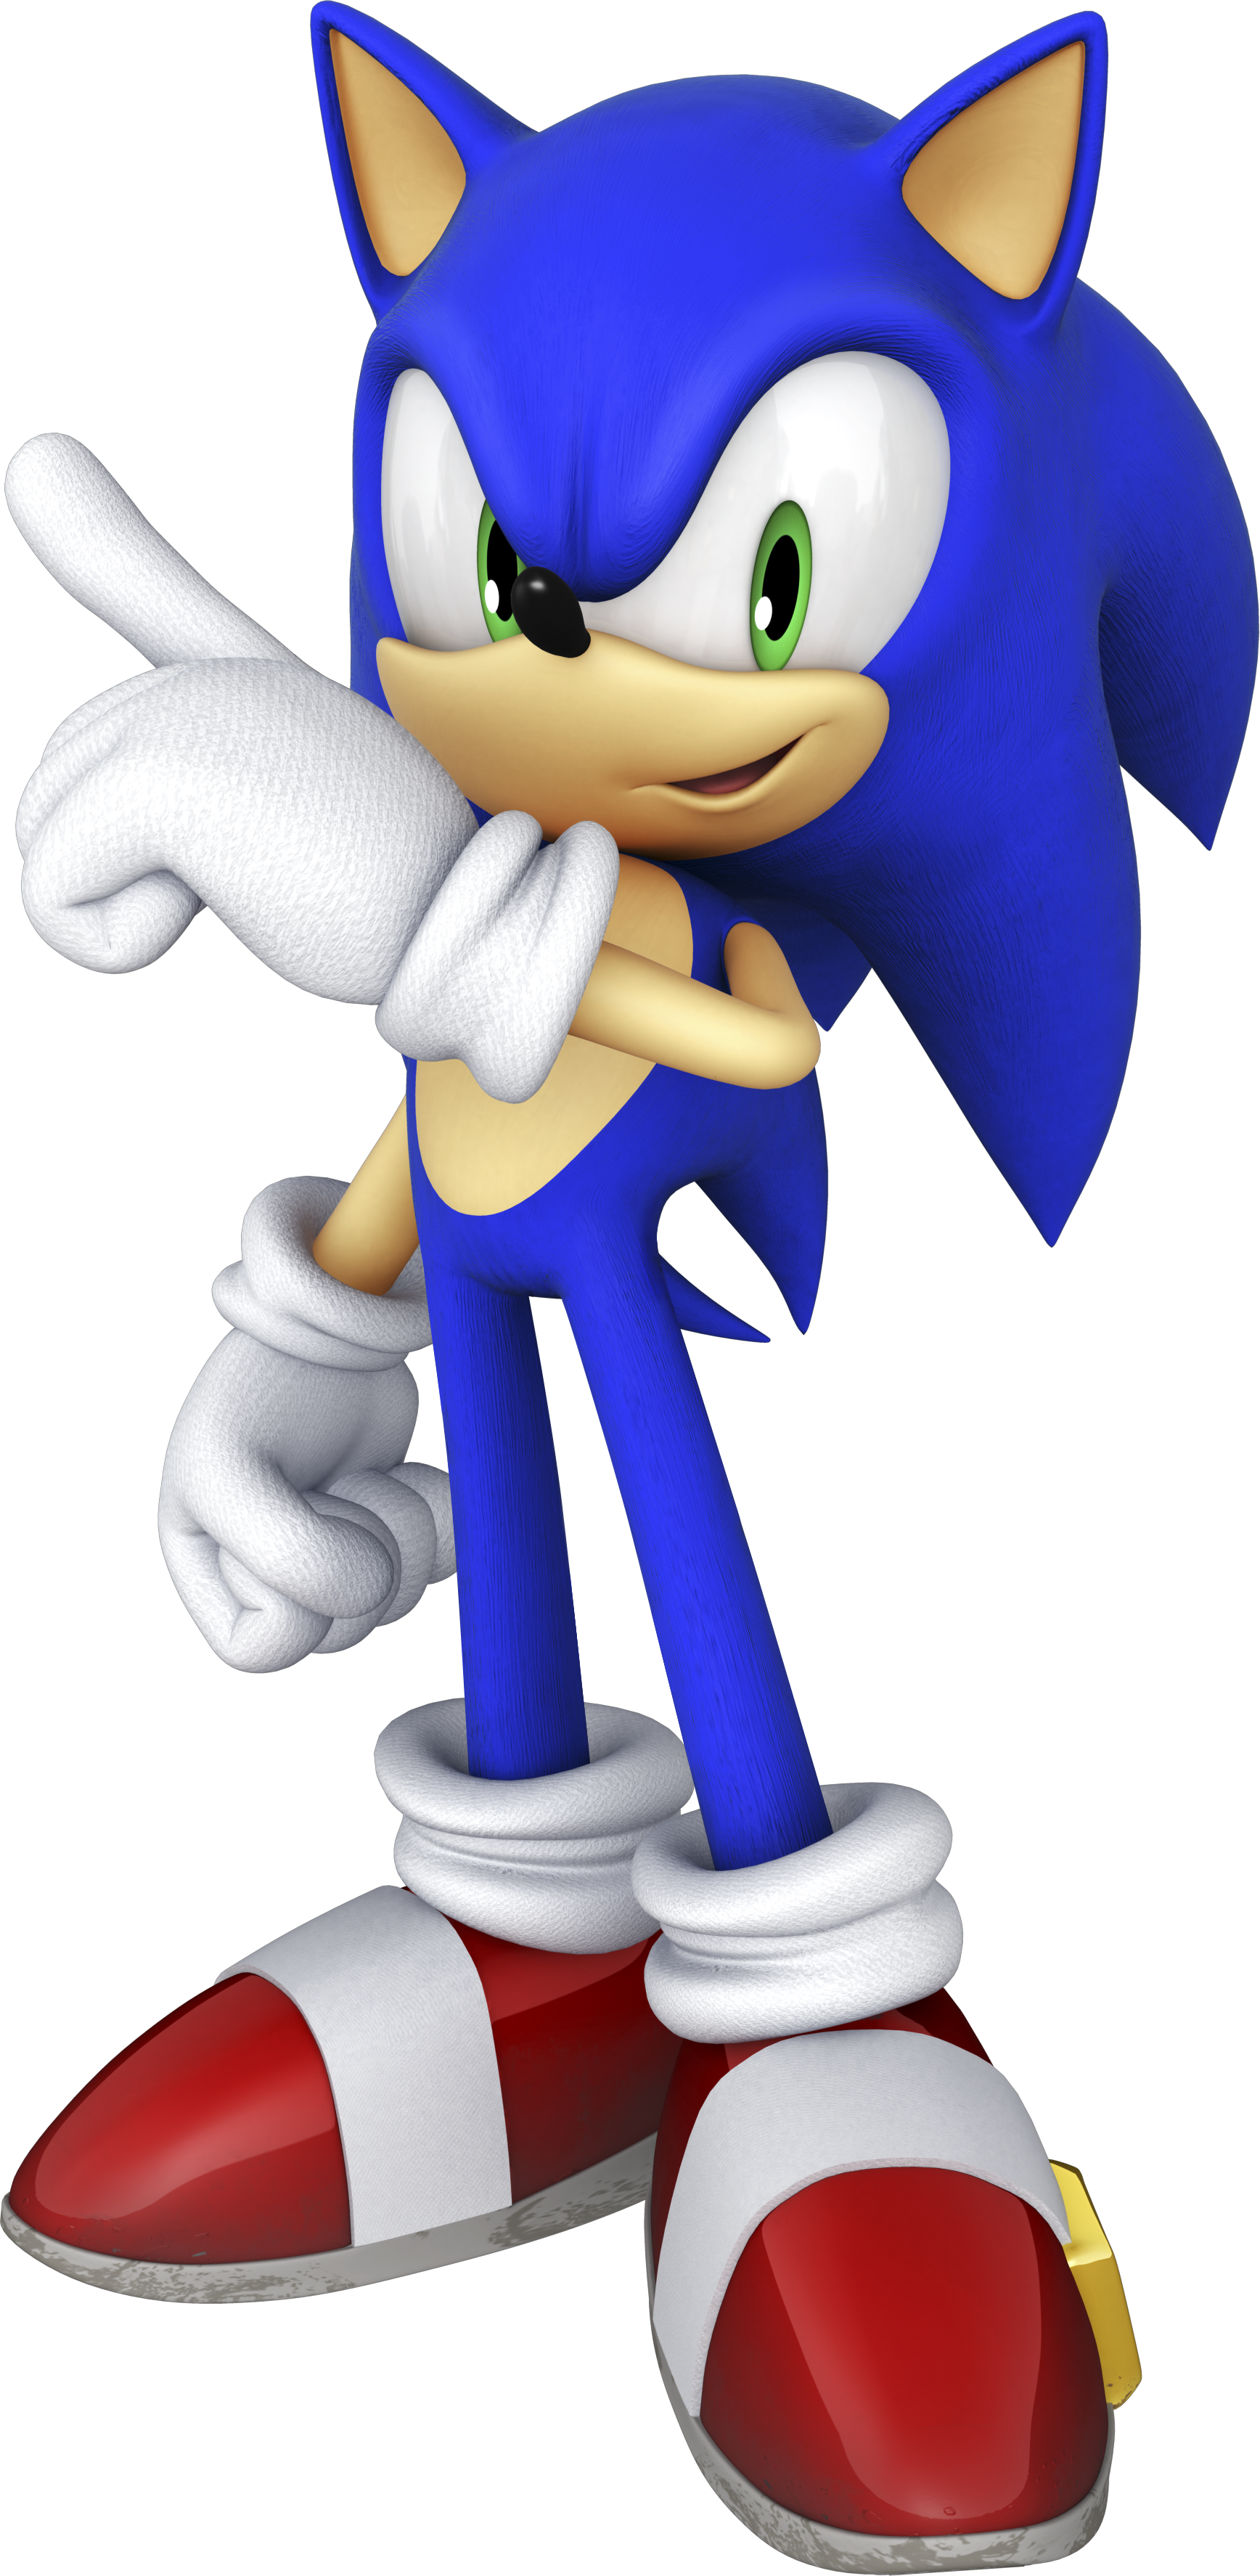 Sonic the hedgehog by mintenn